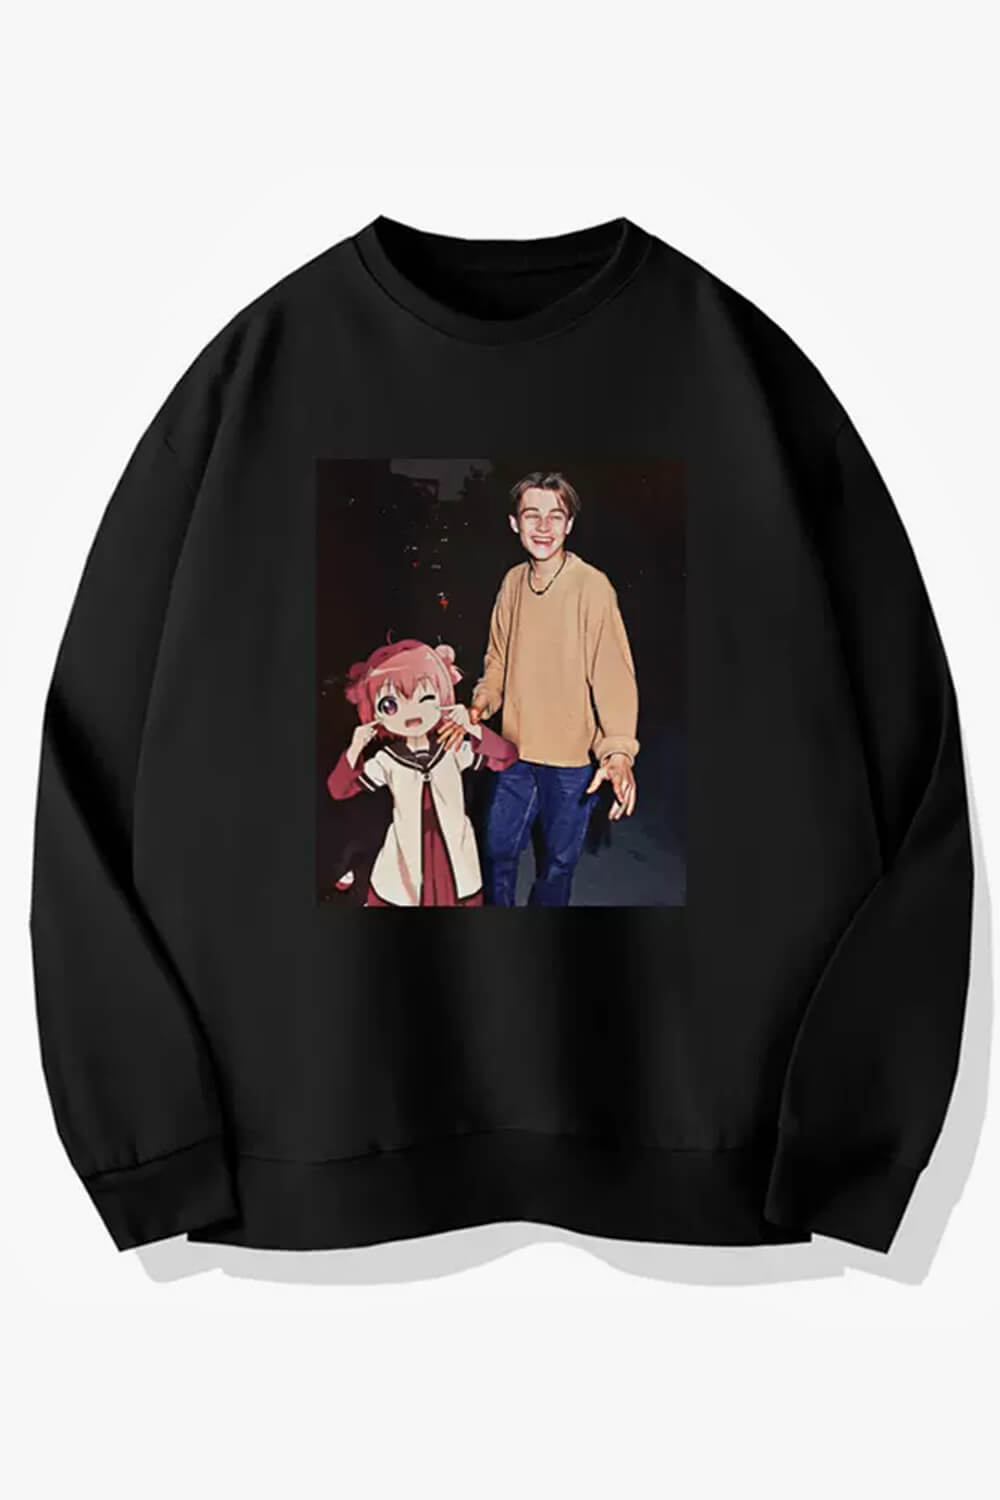 Leonardo DiCaprio and Anime Girl Sweatshirt Animecore